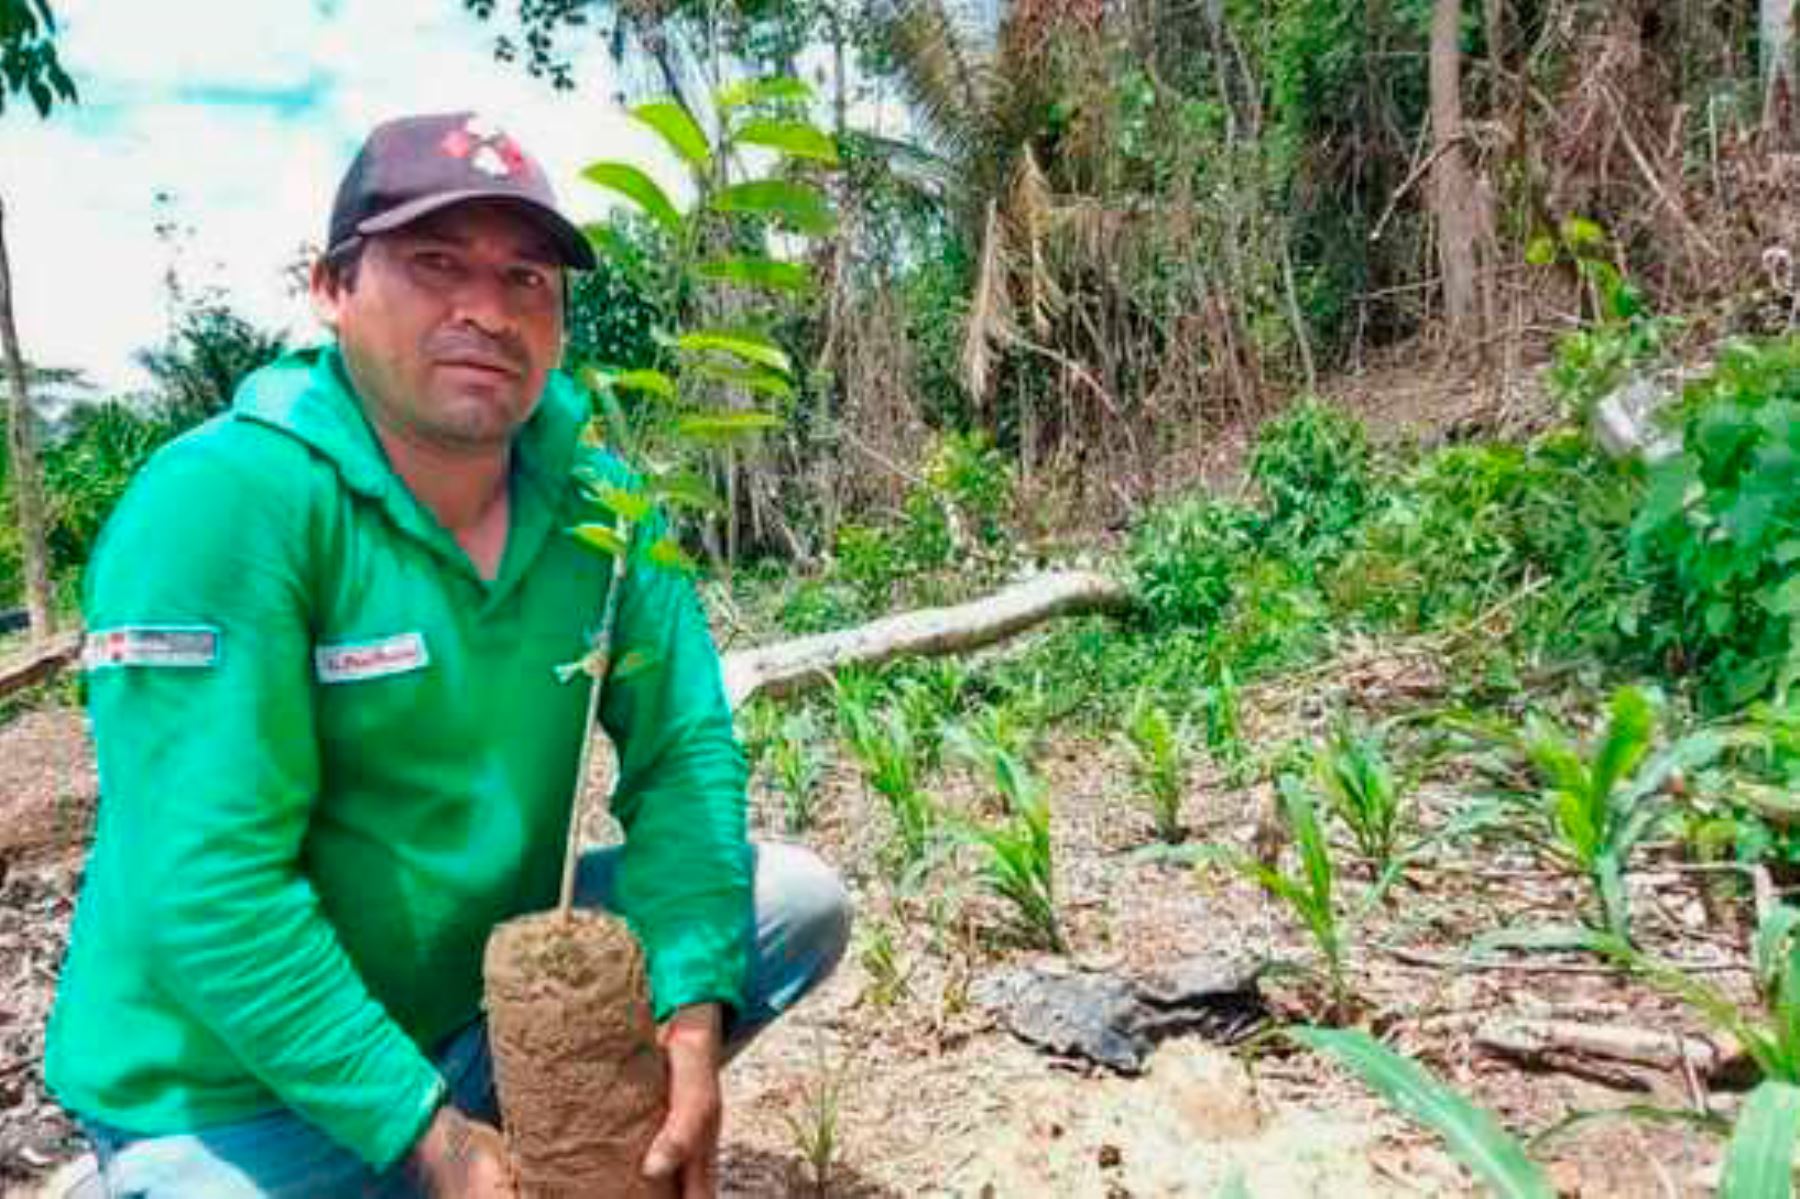 Devida prevé que para el 2023 se pueda producir 20,000 kilos de guanábana en tres localidades del distrito de Pangoa, en el Vraem. Foto: ANDINA/Devida